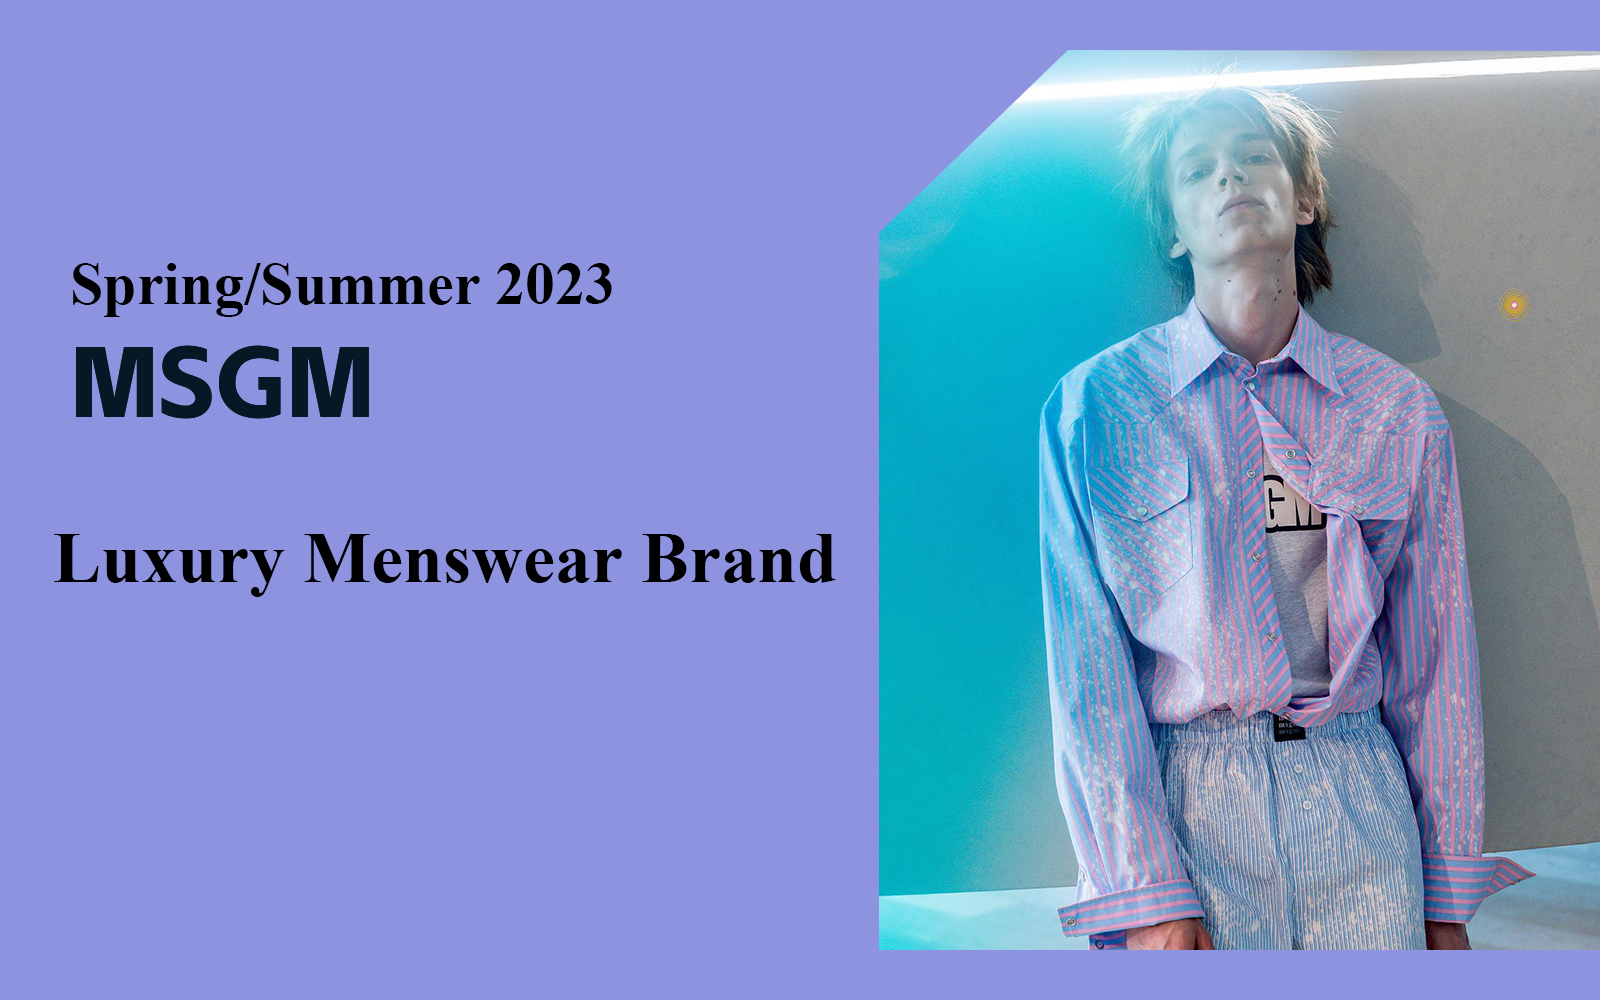 Island Holiday -- The Analysis of MSGM The Luxury Menswear Brand